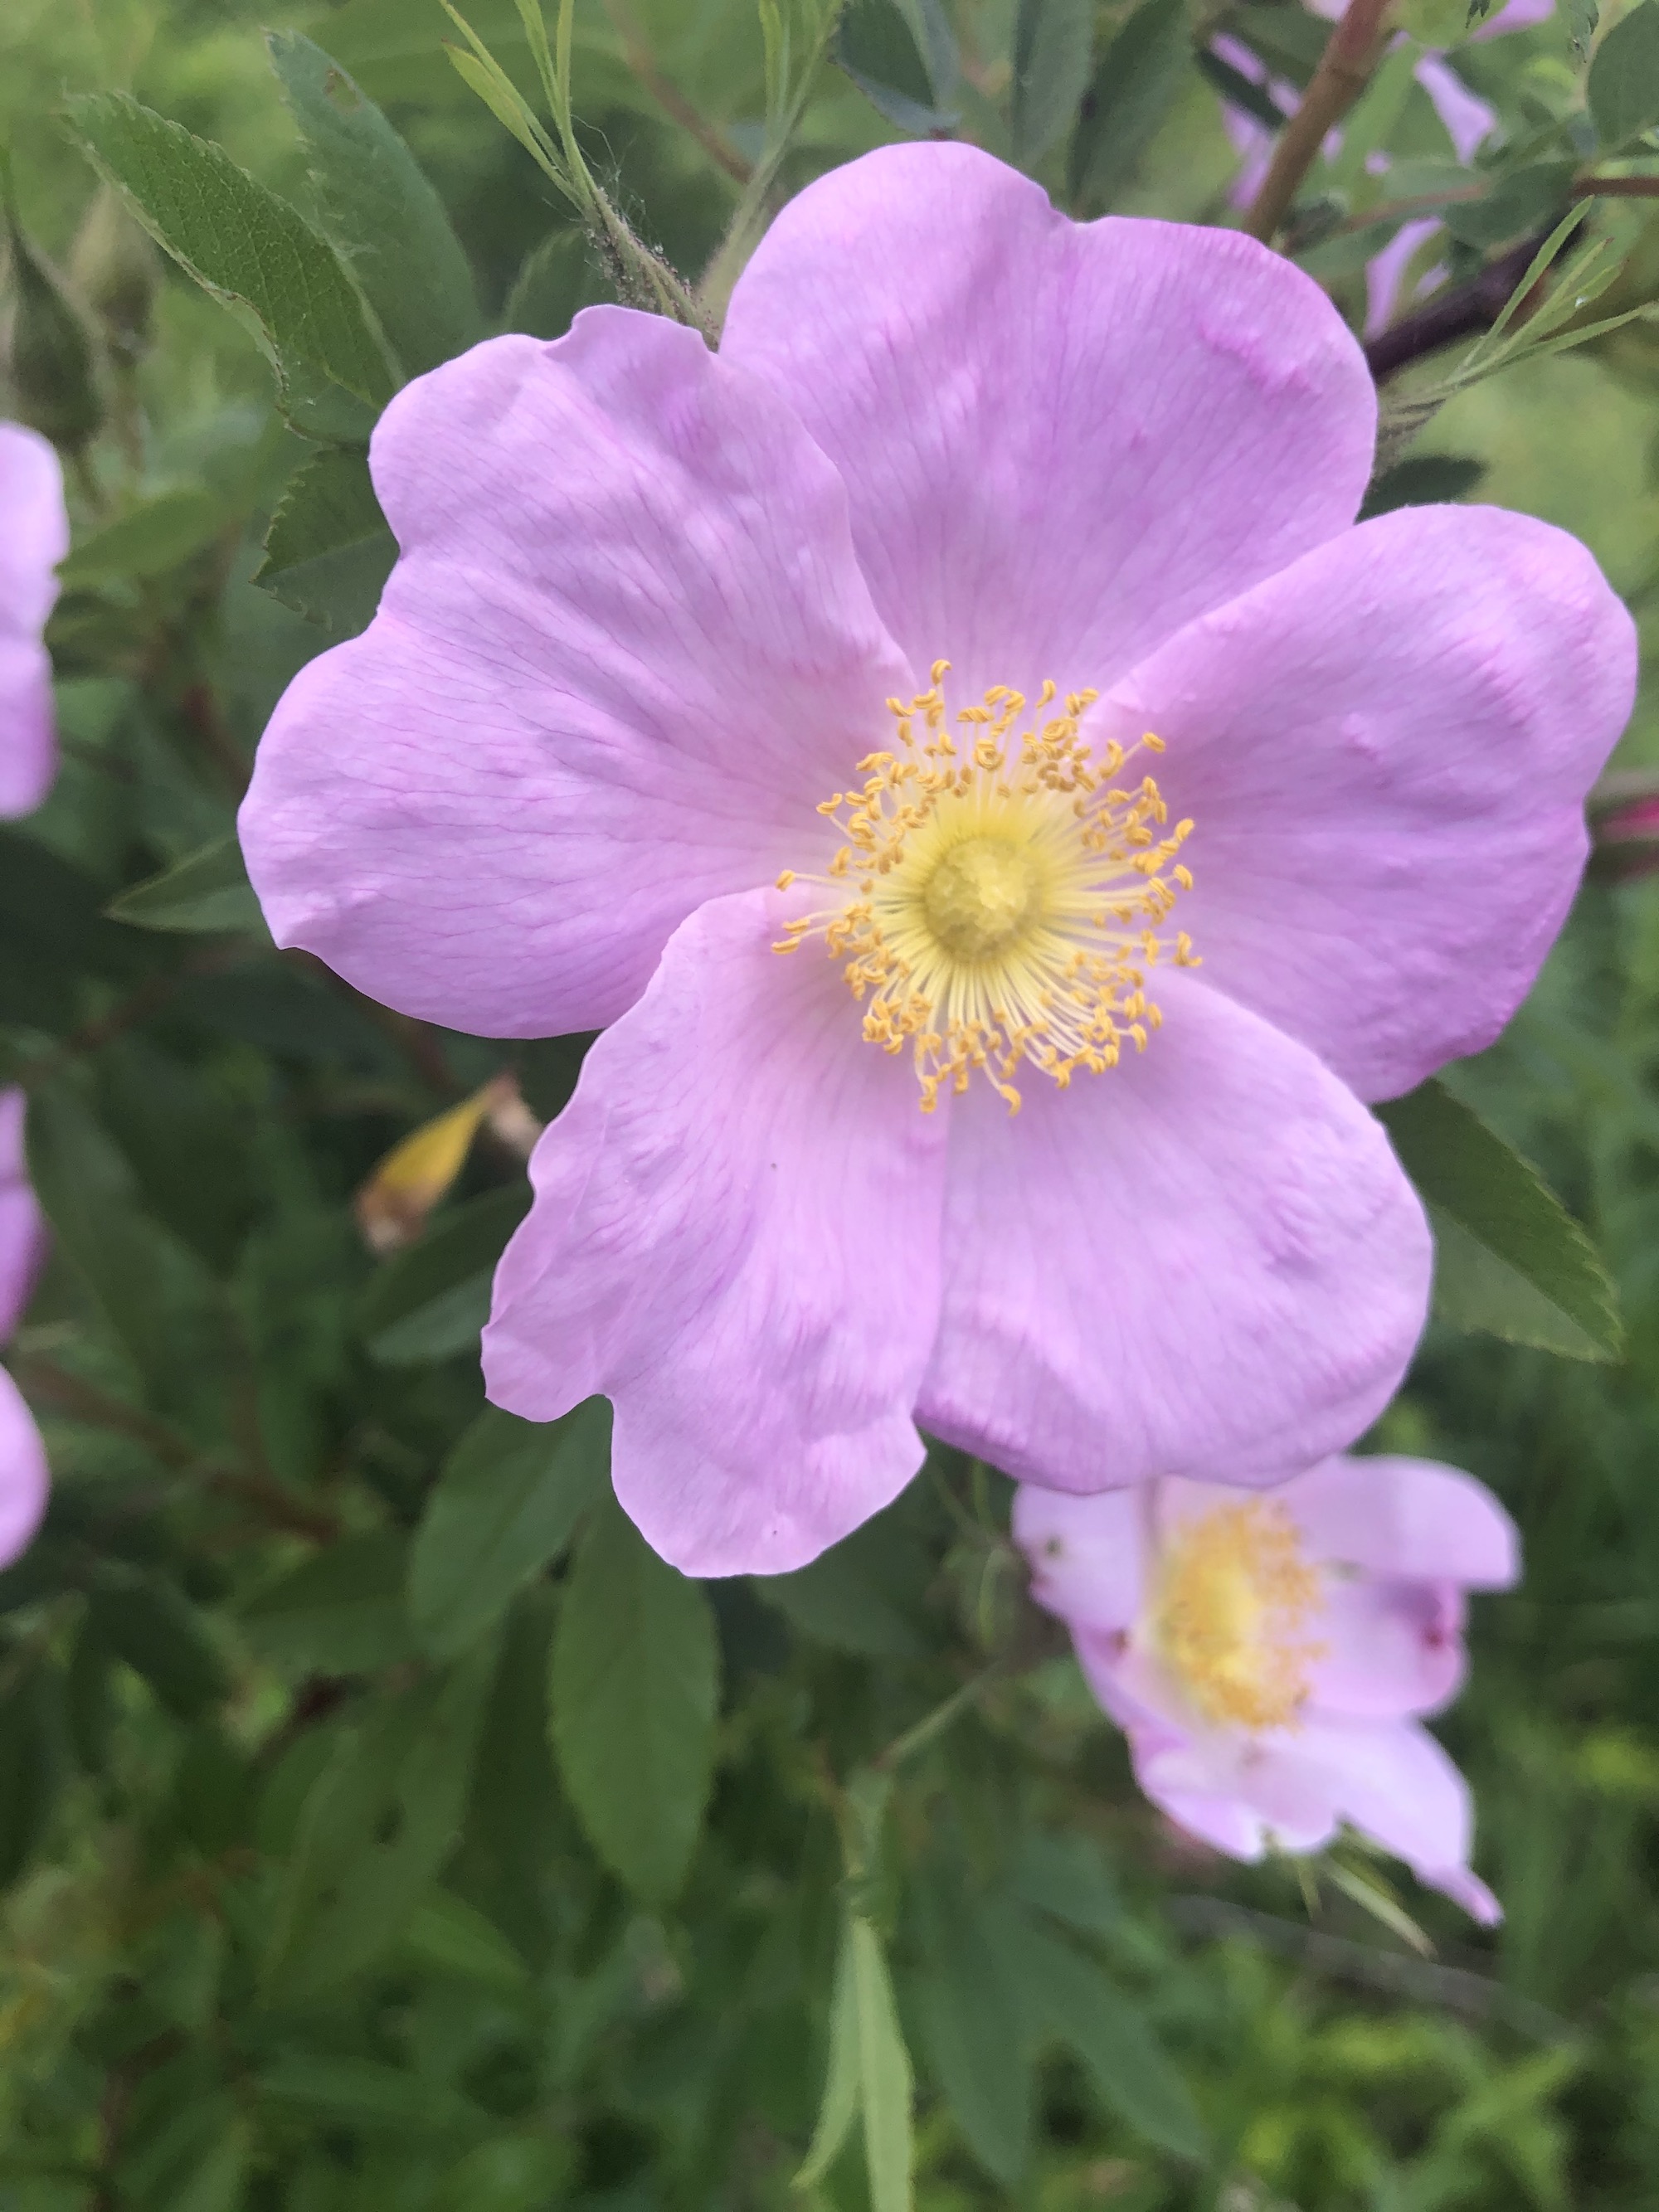 Prairie Rose in UW Arboretum near Longenecker Horticultural Gardens on June 2, 2021.